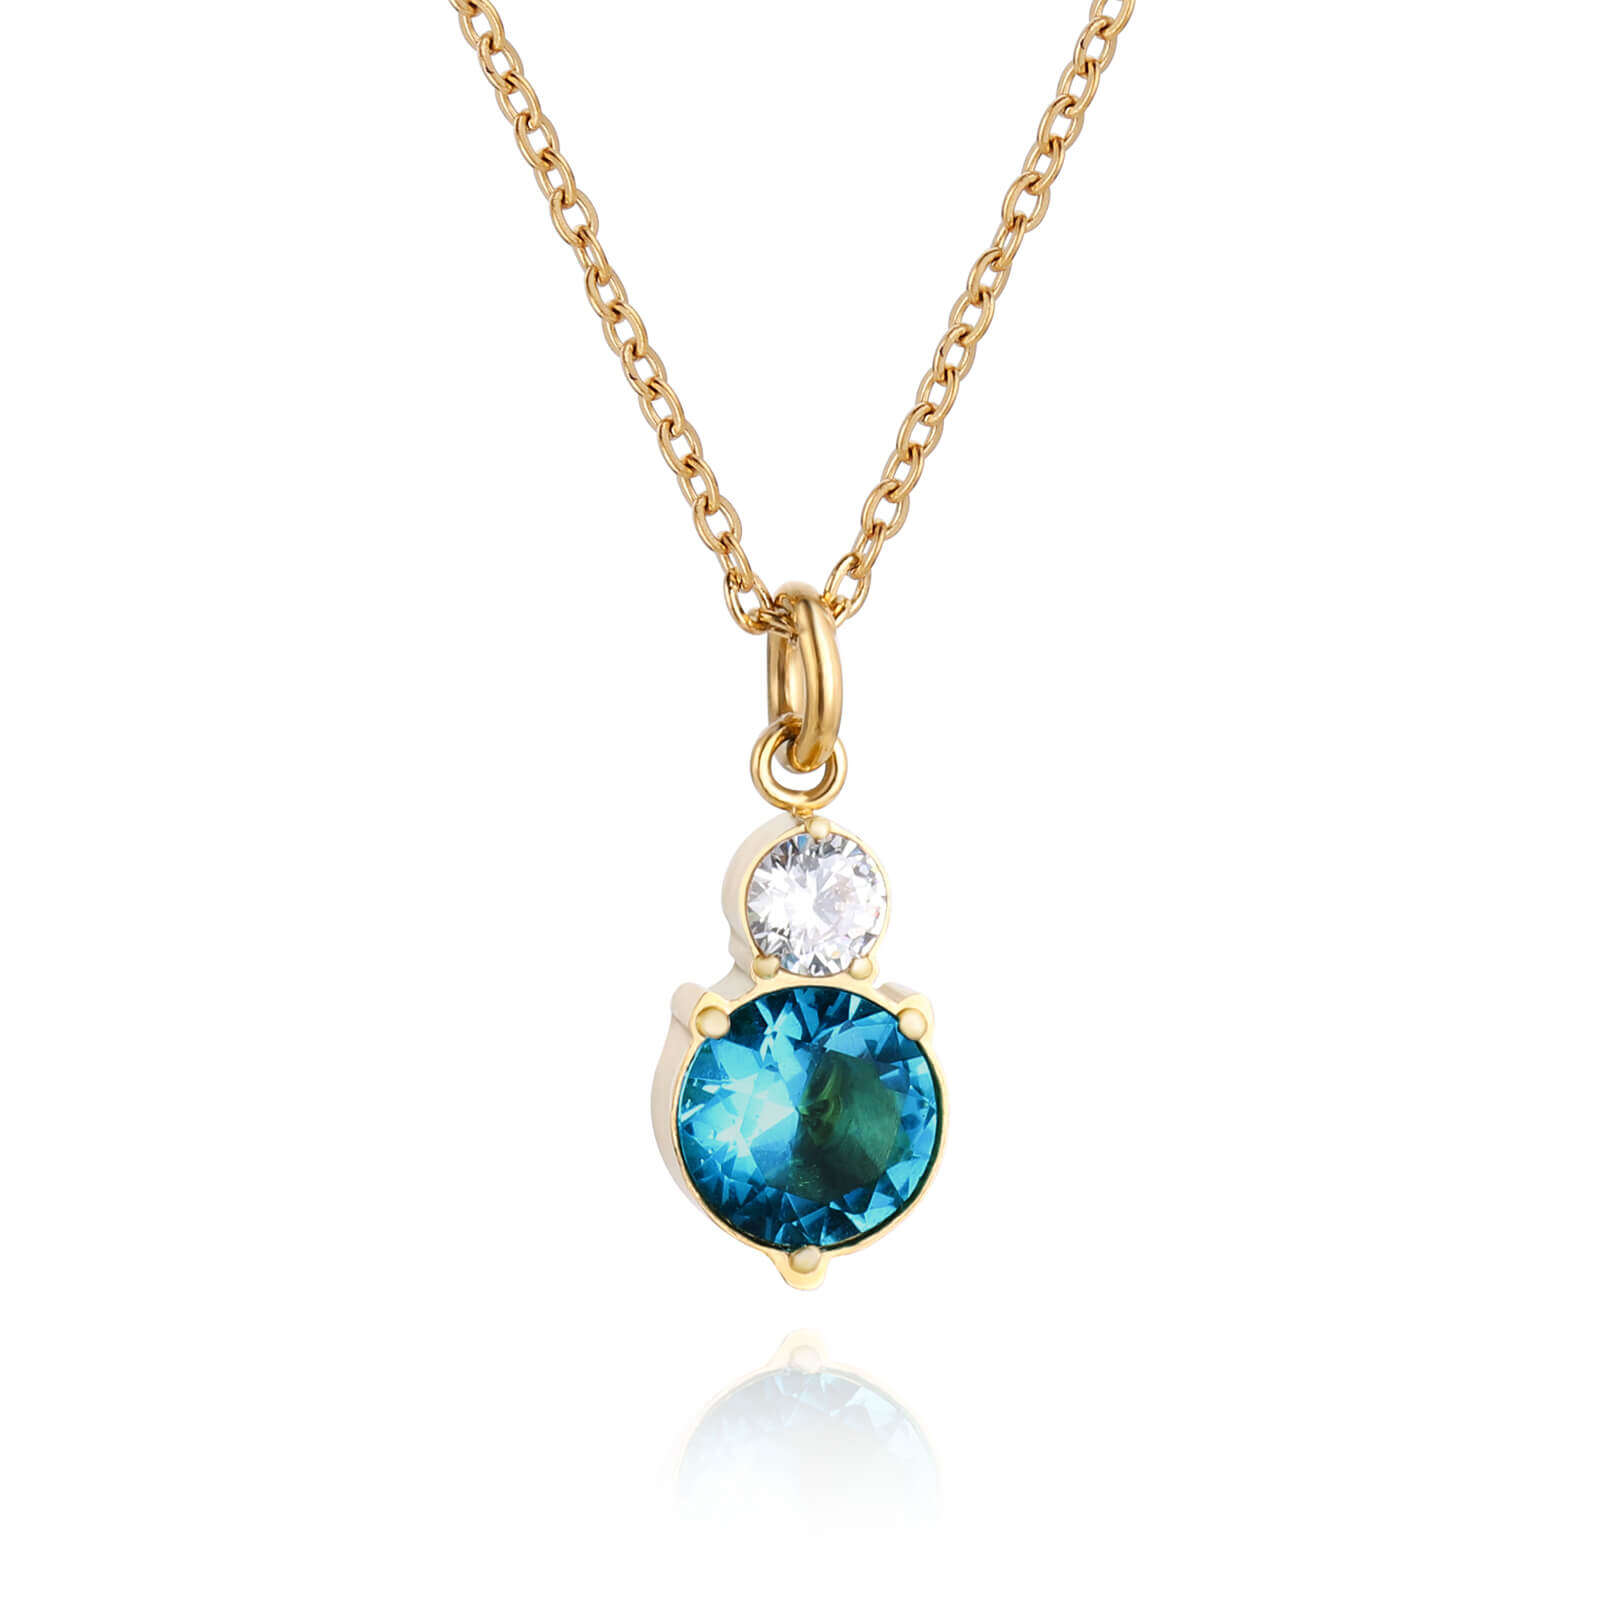 gemstone necklace set,gemstone necklace online,chunky gemstone necklace,gemstone pendant set,moon gemstone necklace